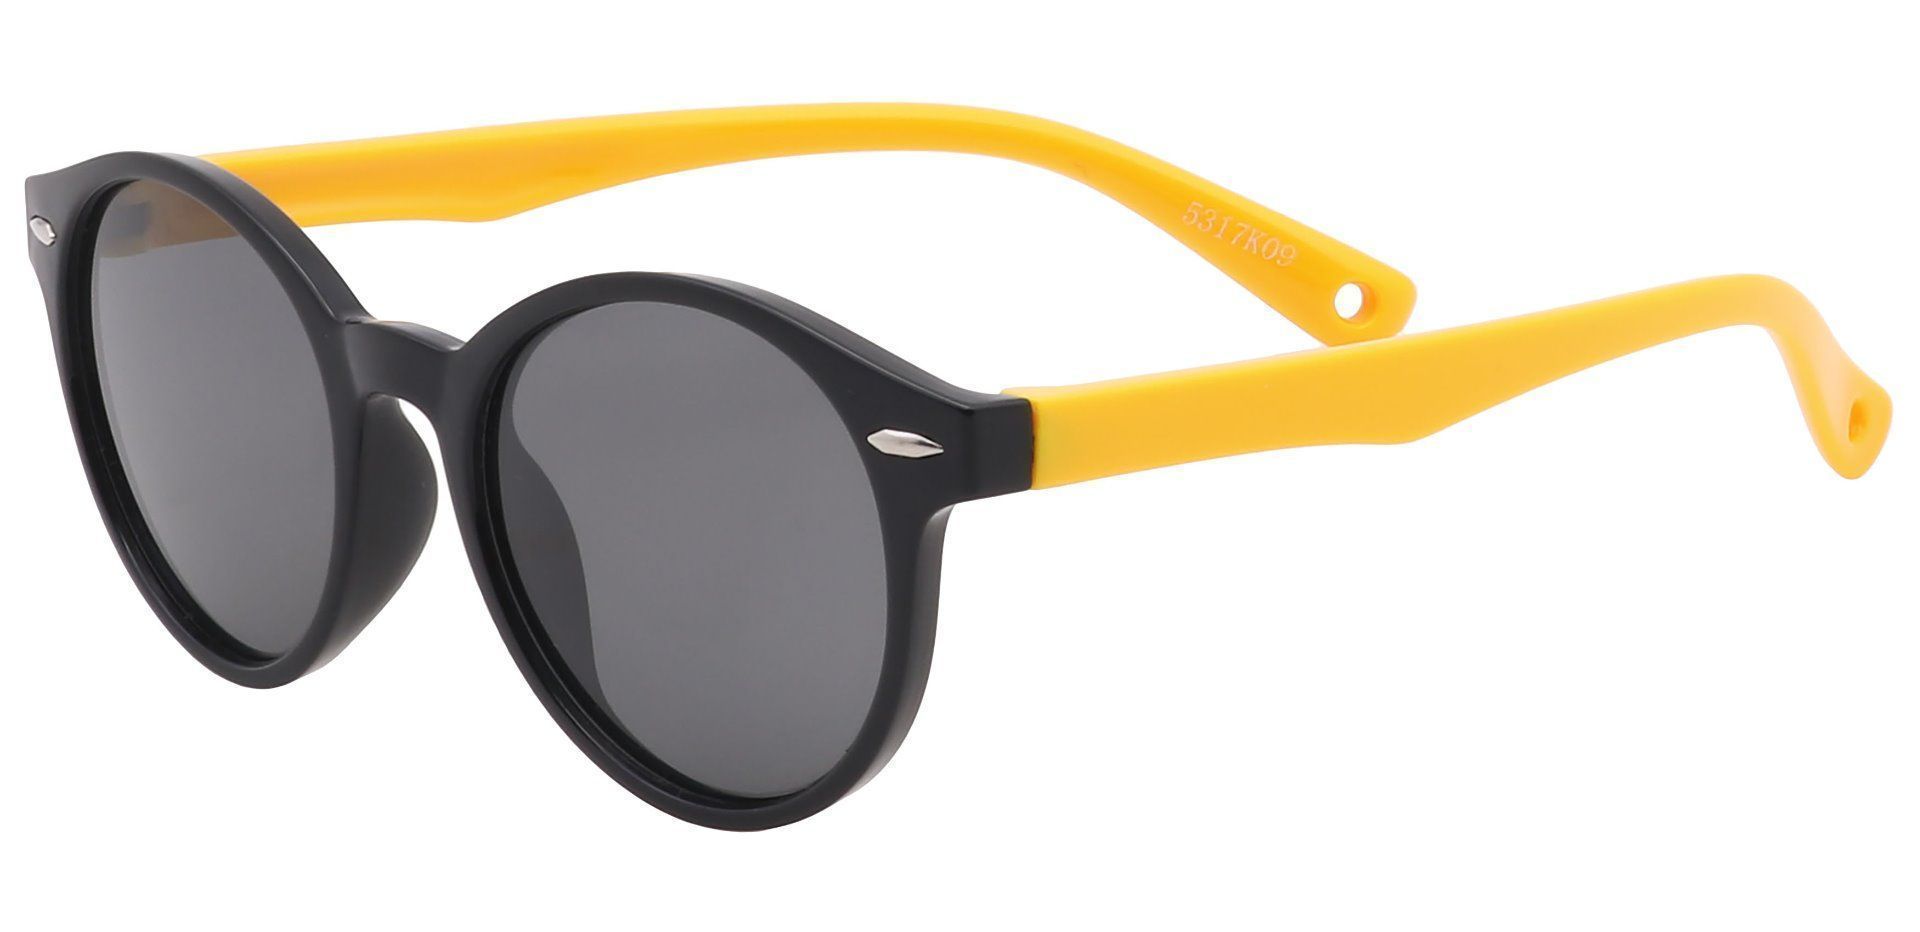 Harris Round Single Vision Sunglasses - Black Frame With Gray Lenses